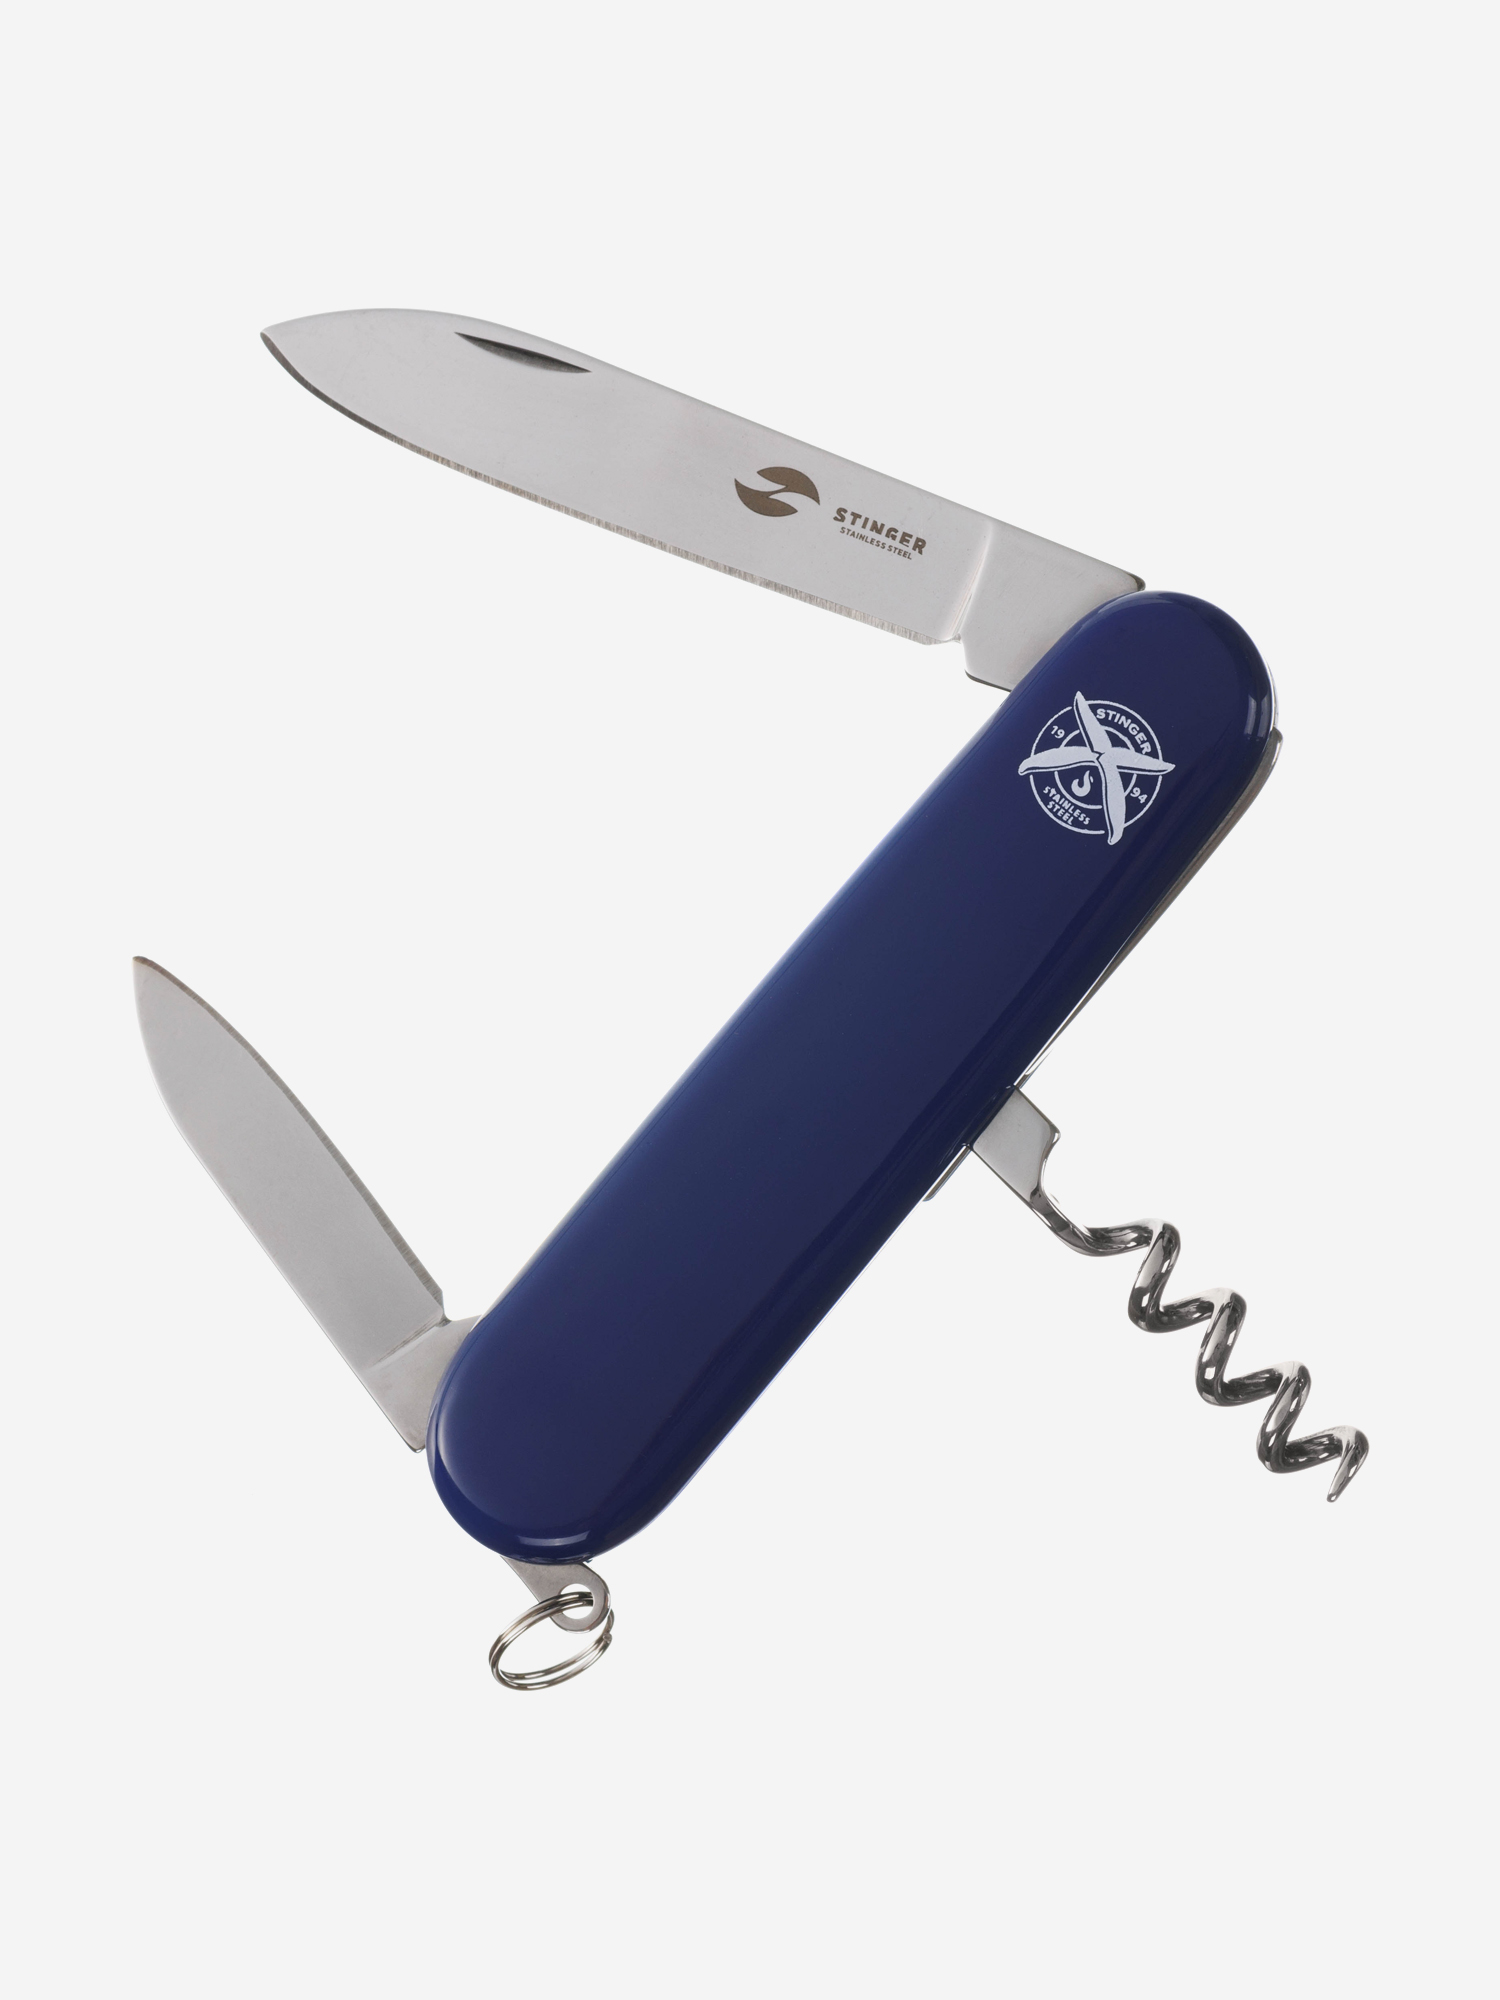 Нож перочинный Stinger, 90 мм, 4 функции, материал рукояти: АБС-пластик (синий), Синий нож stinger 114 3 мм серый подарочная упаковка